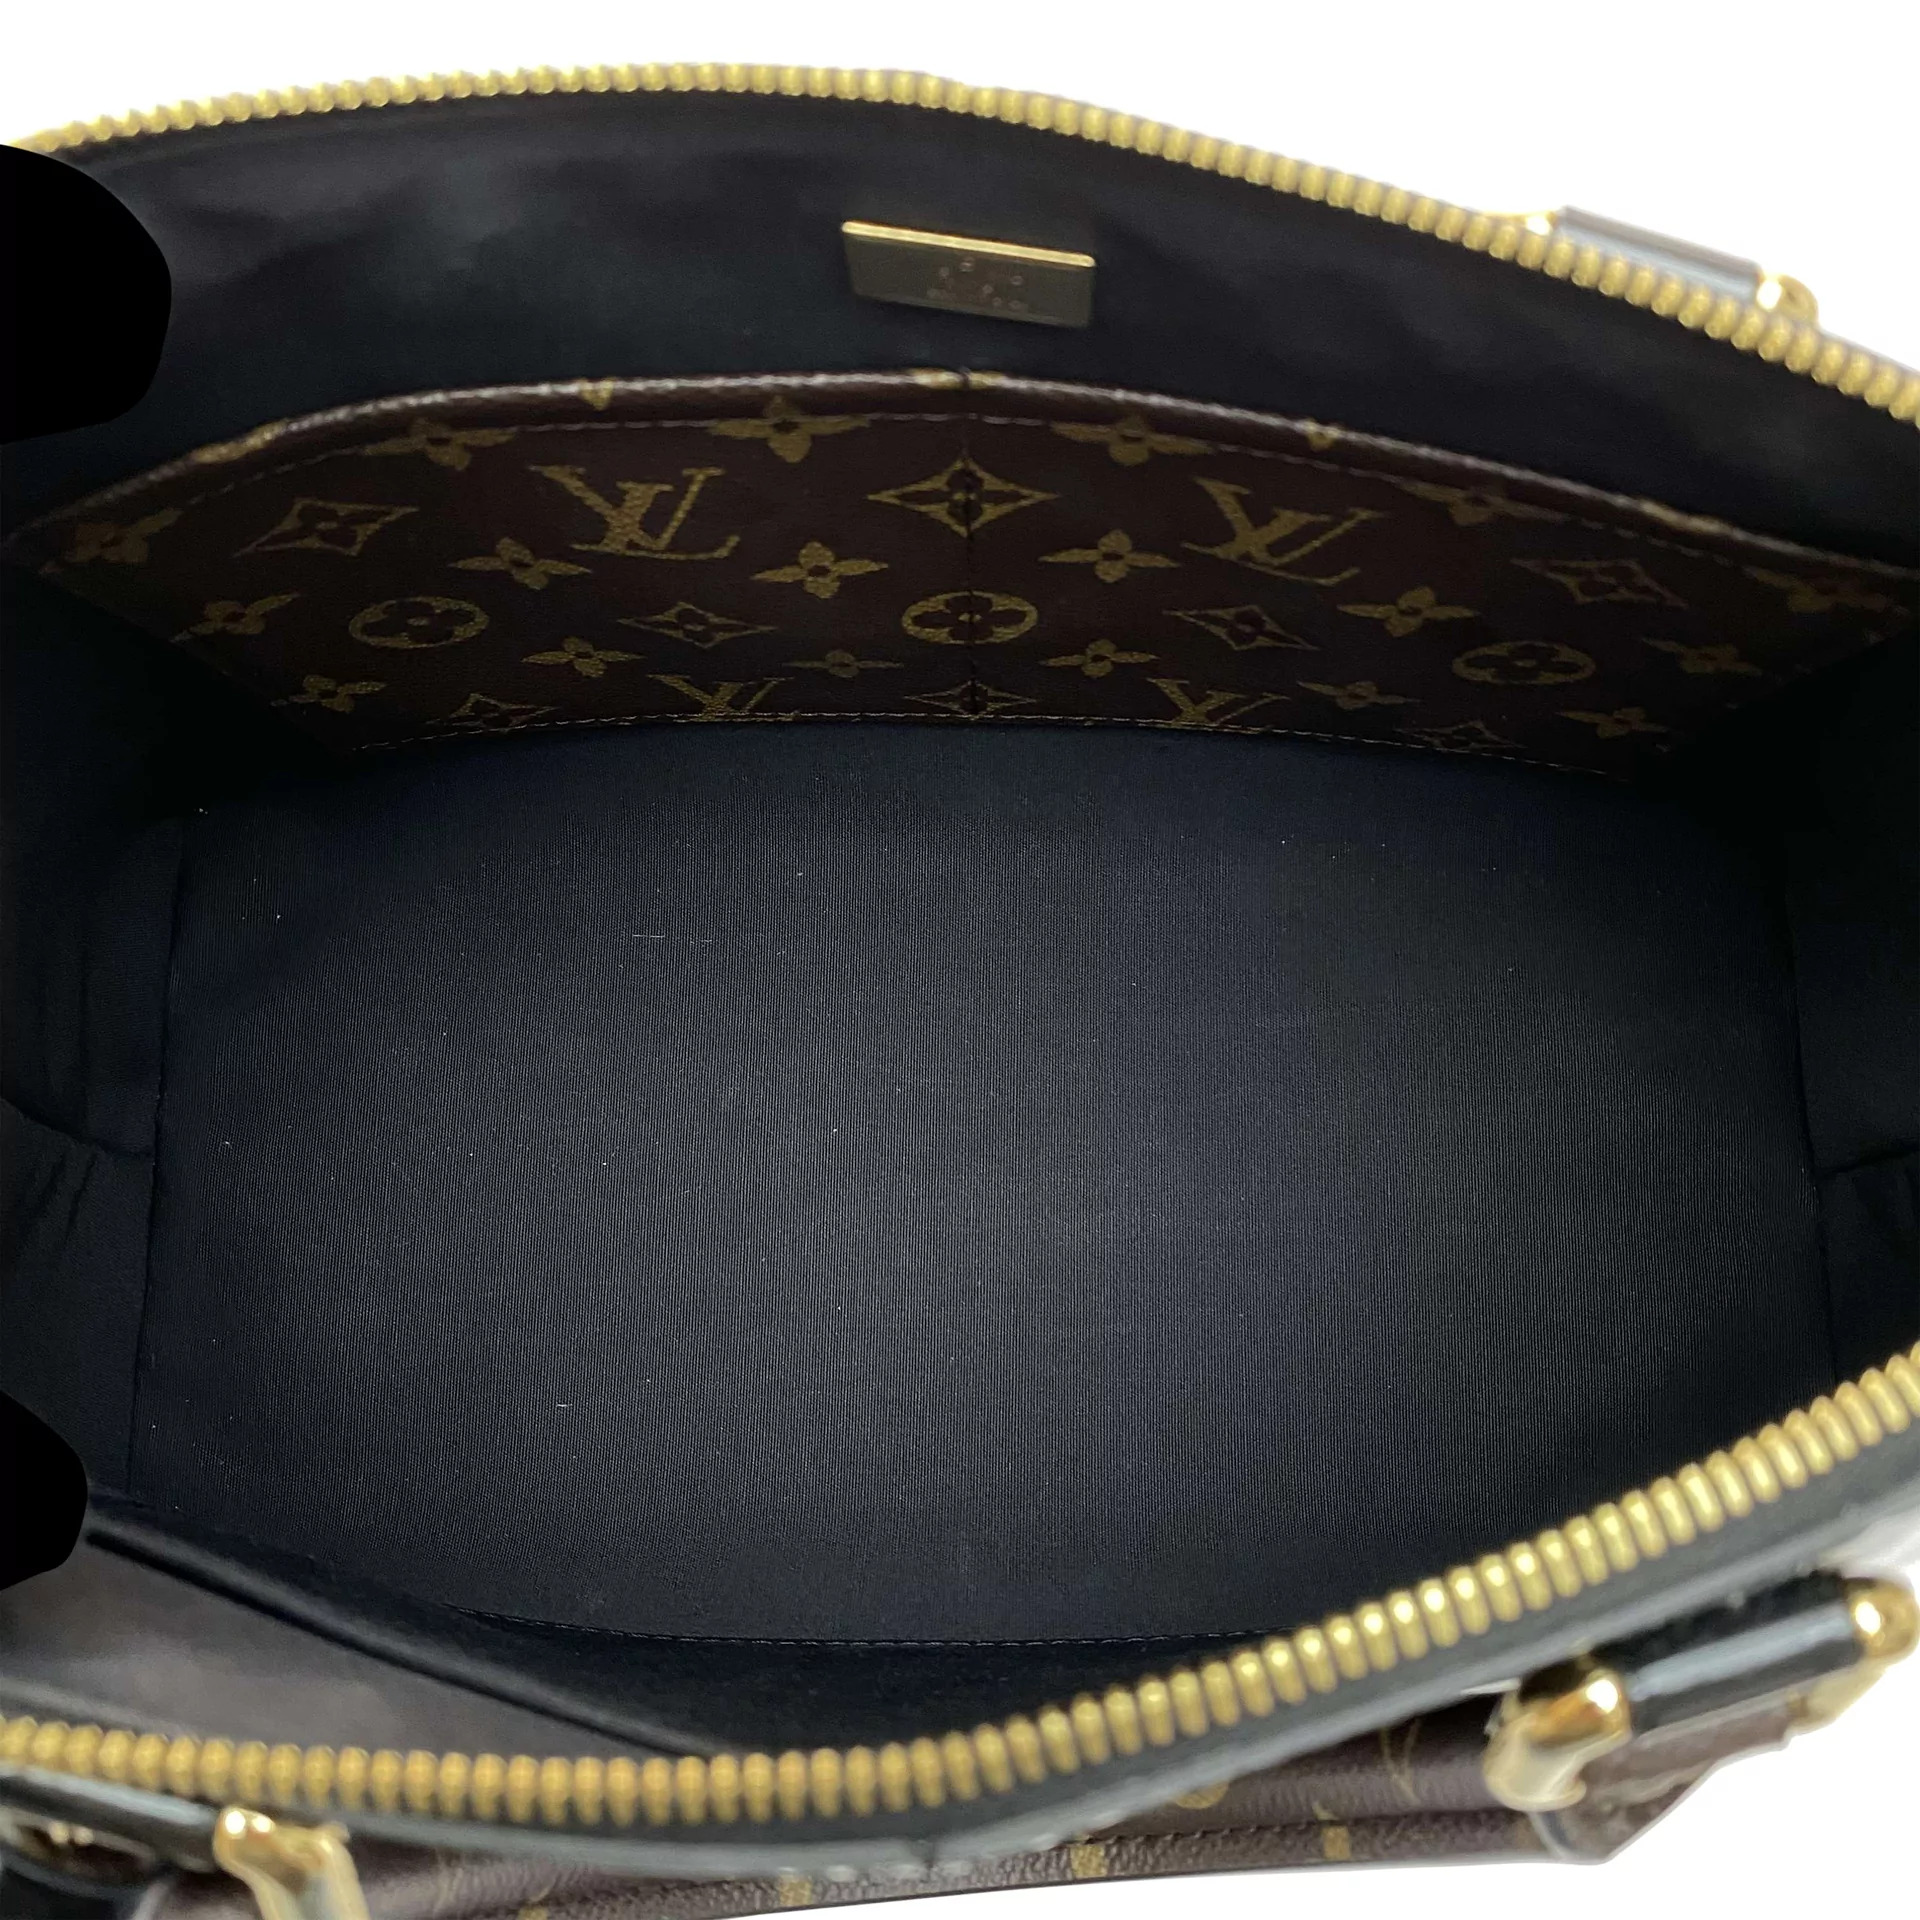 Bolsa Louis Vuitton Miroir Noir